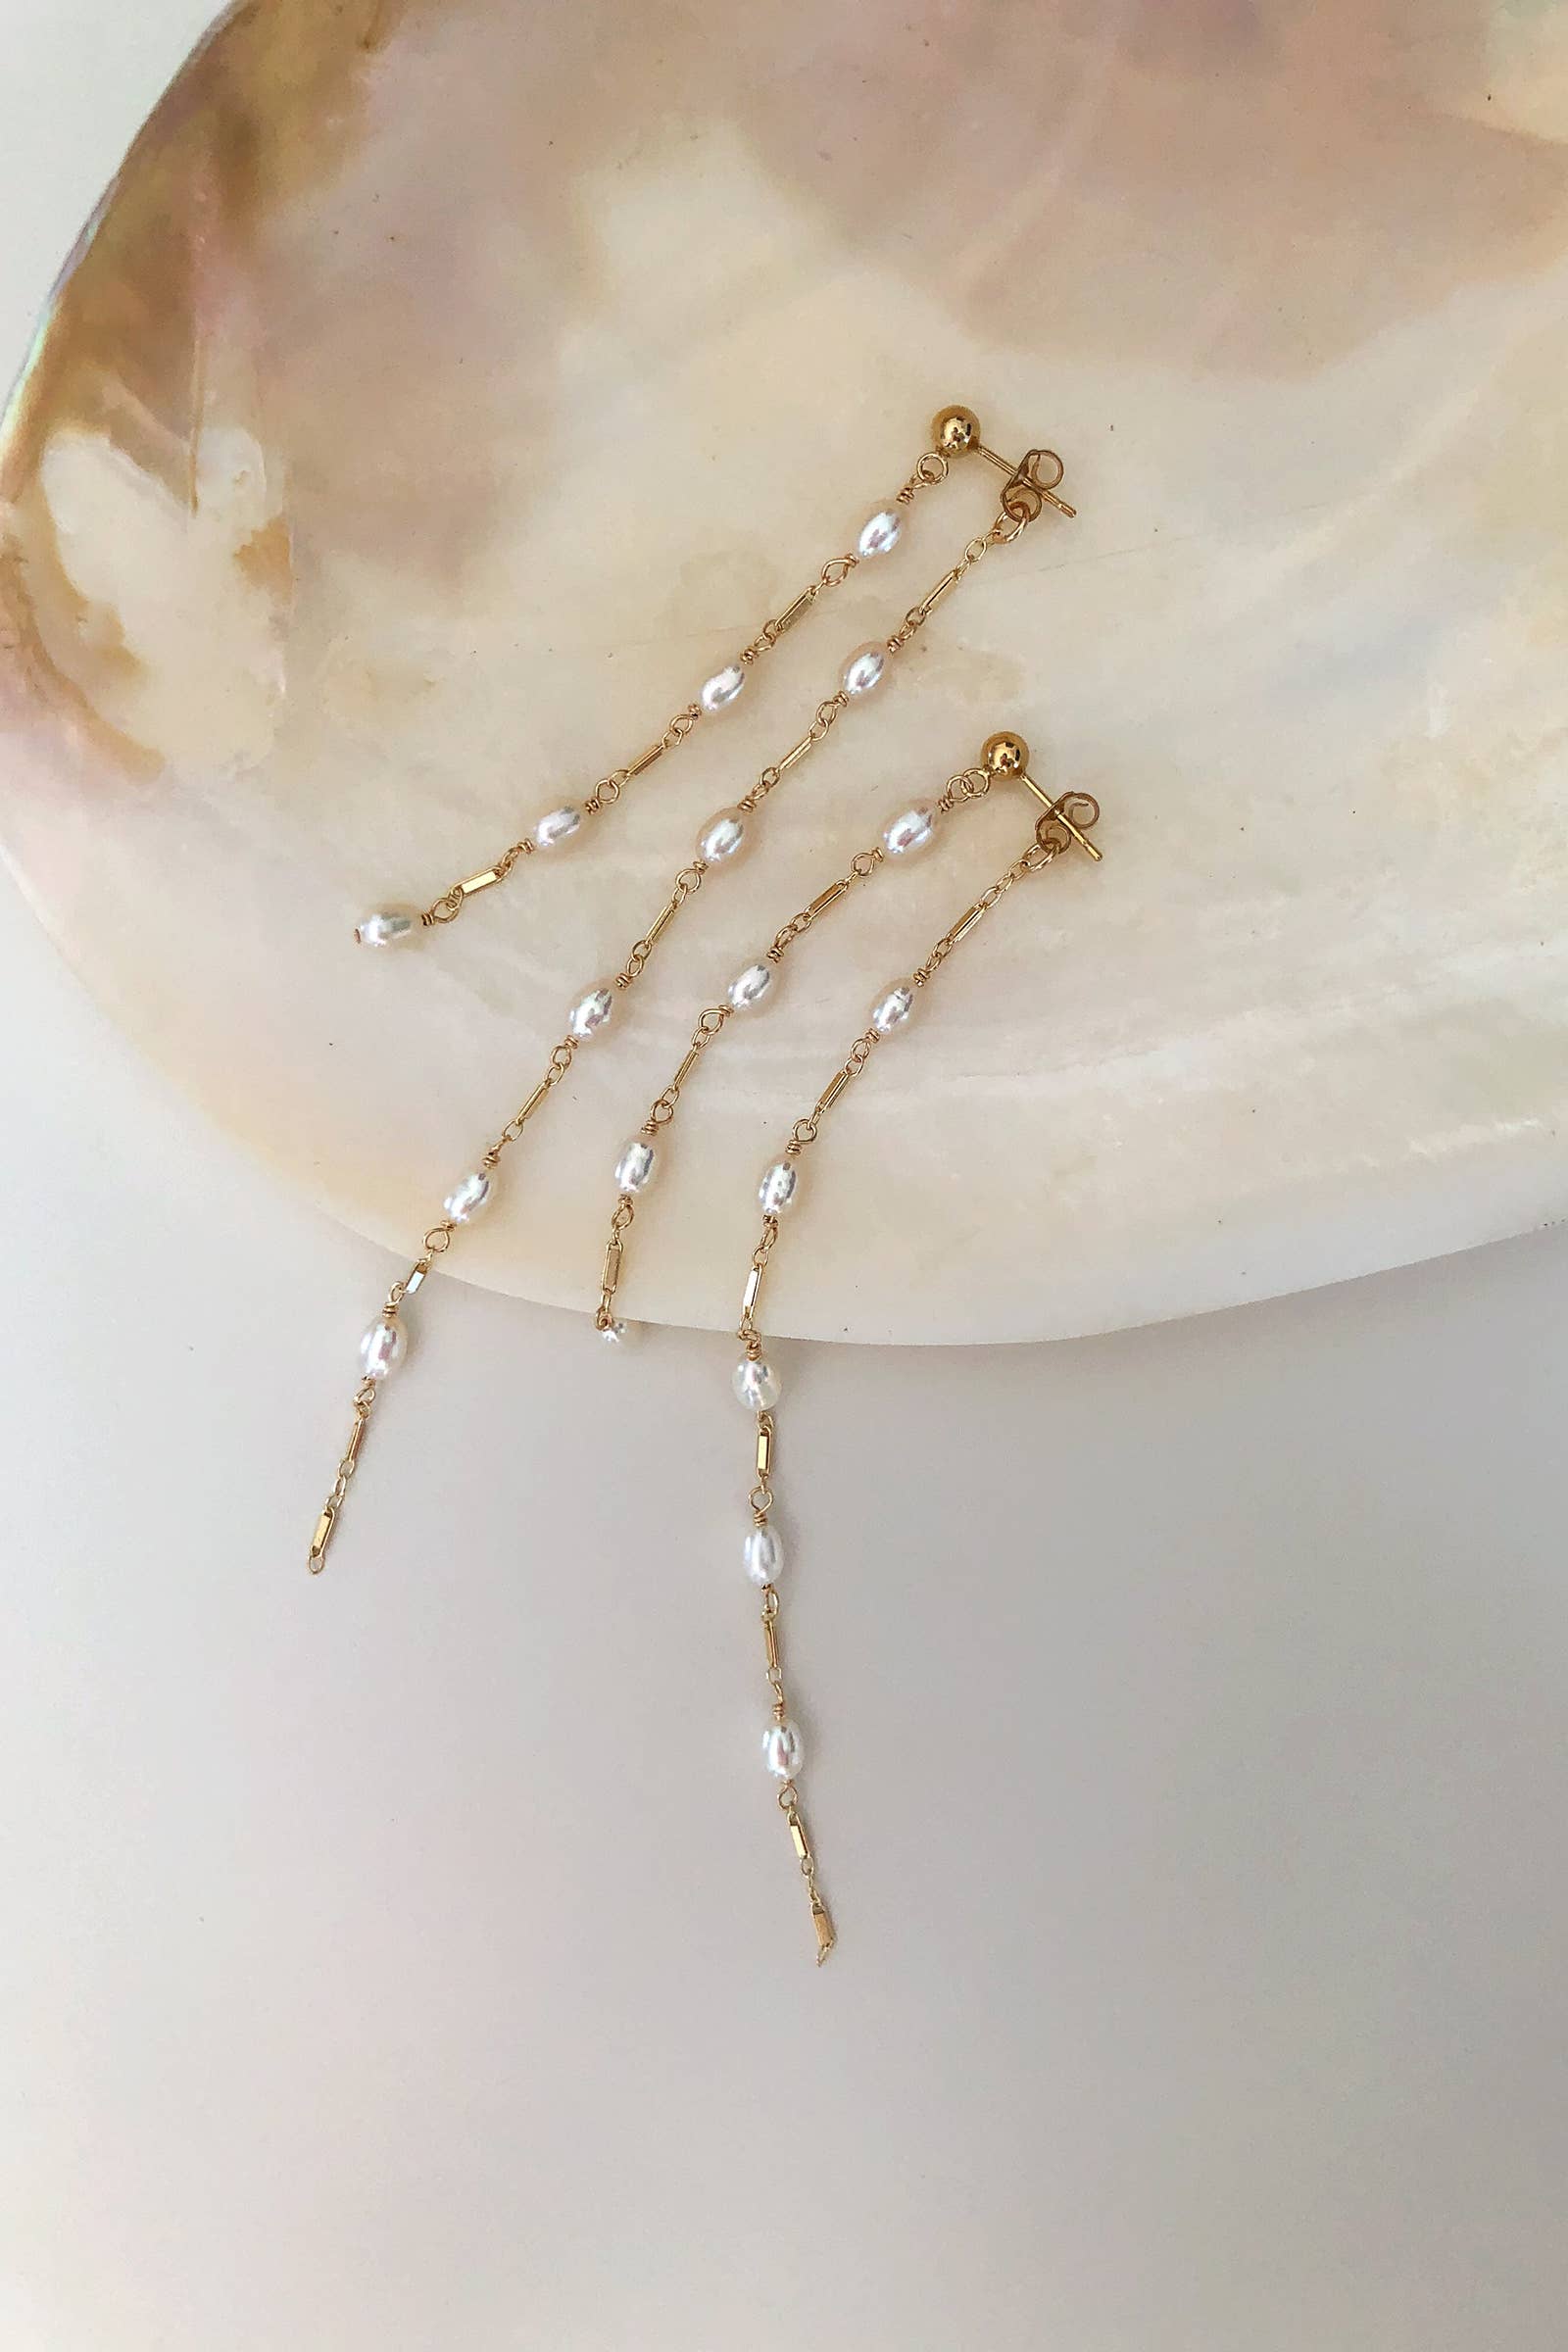 Christine Elizabeth Jewelry - Dripping Freshwater Pearl 360 Earrings - White